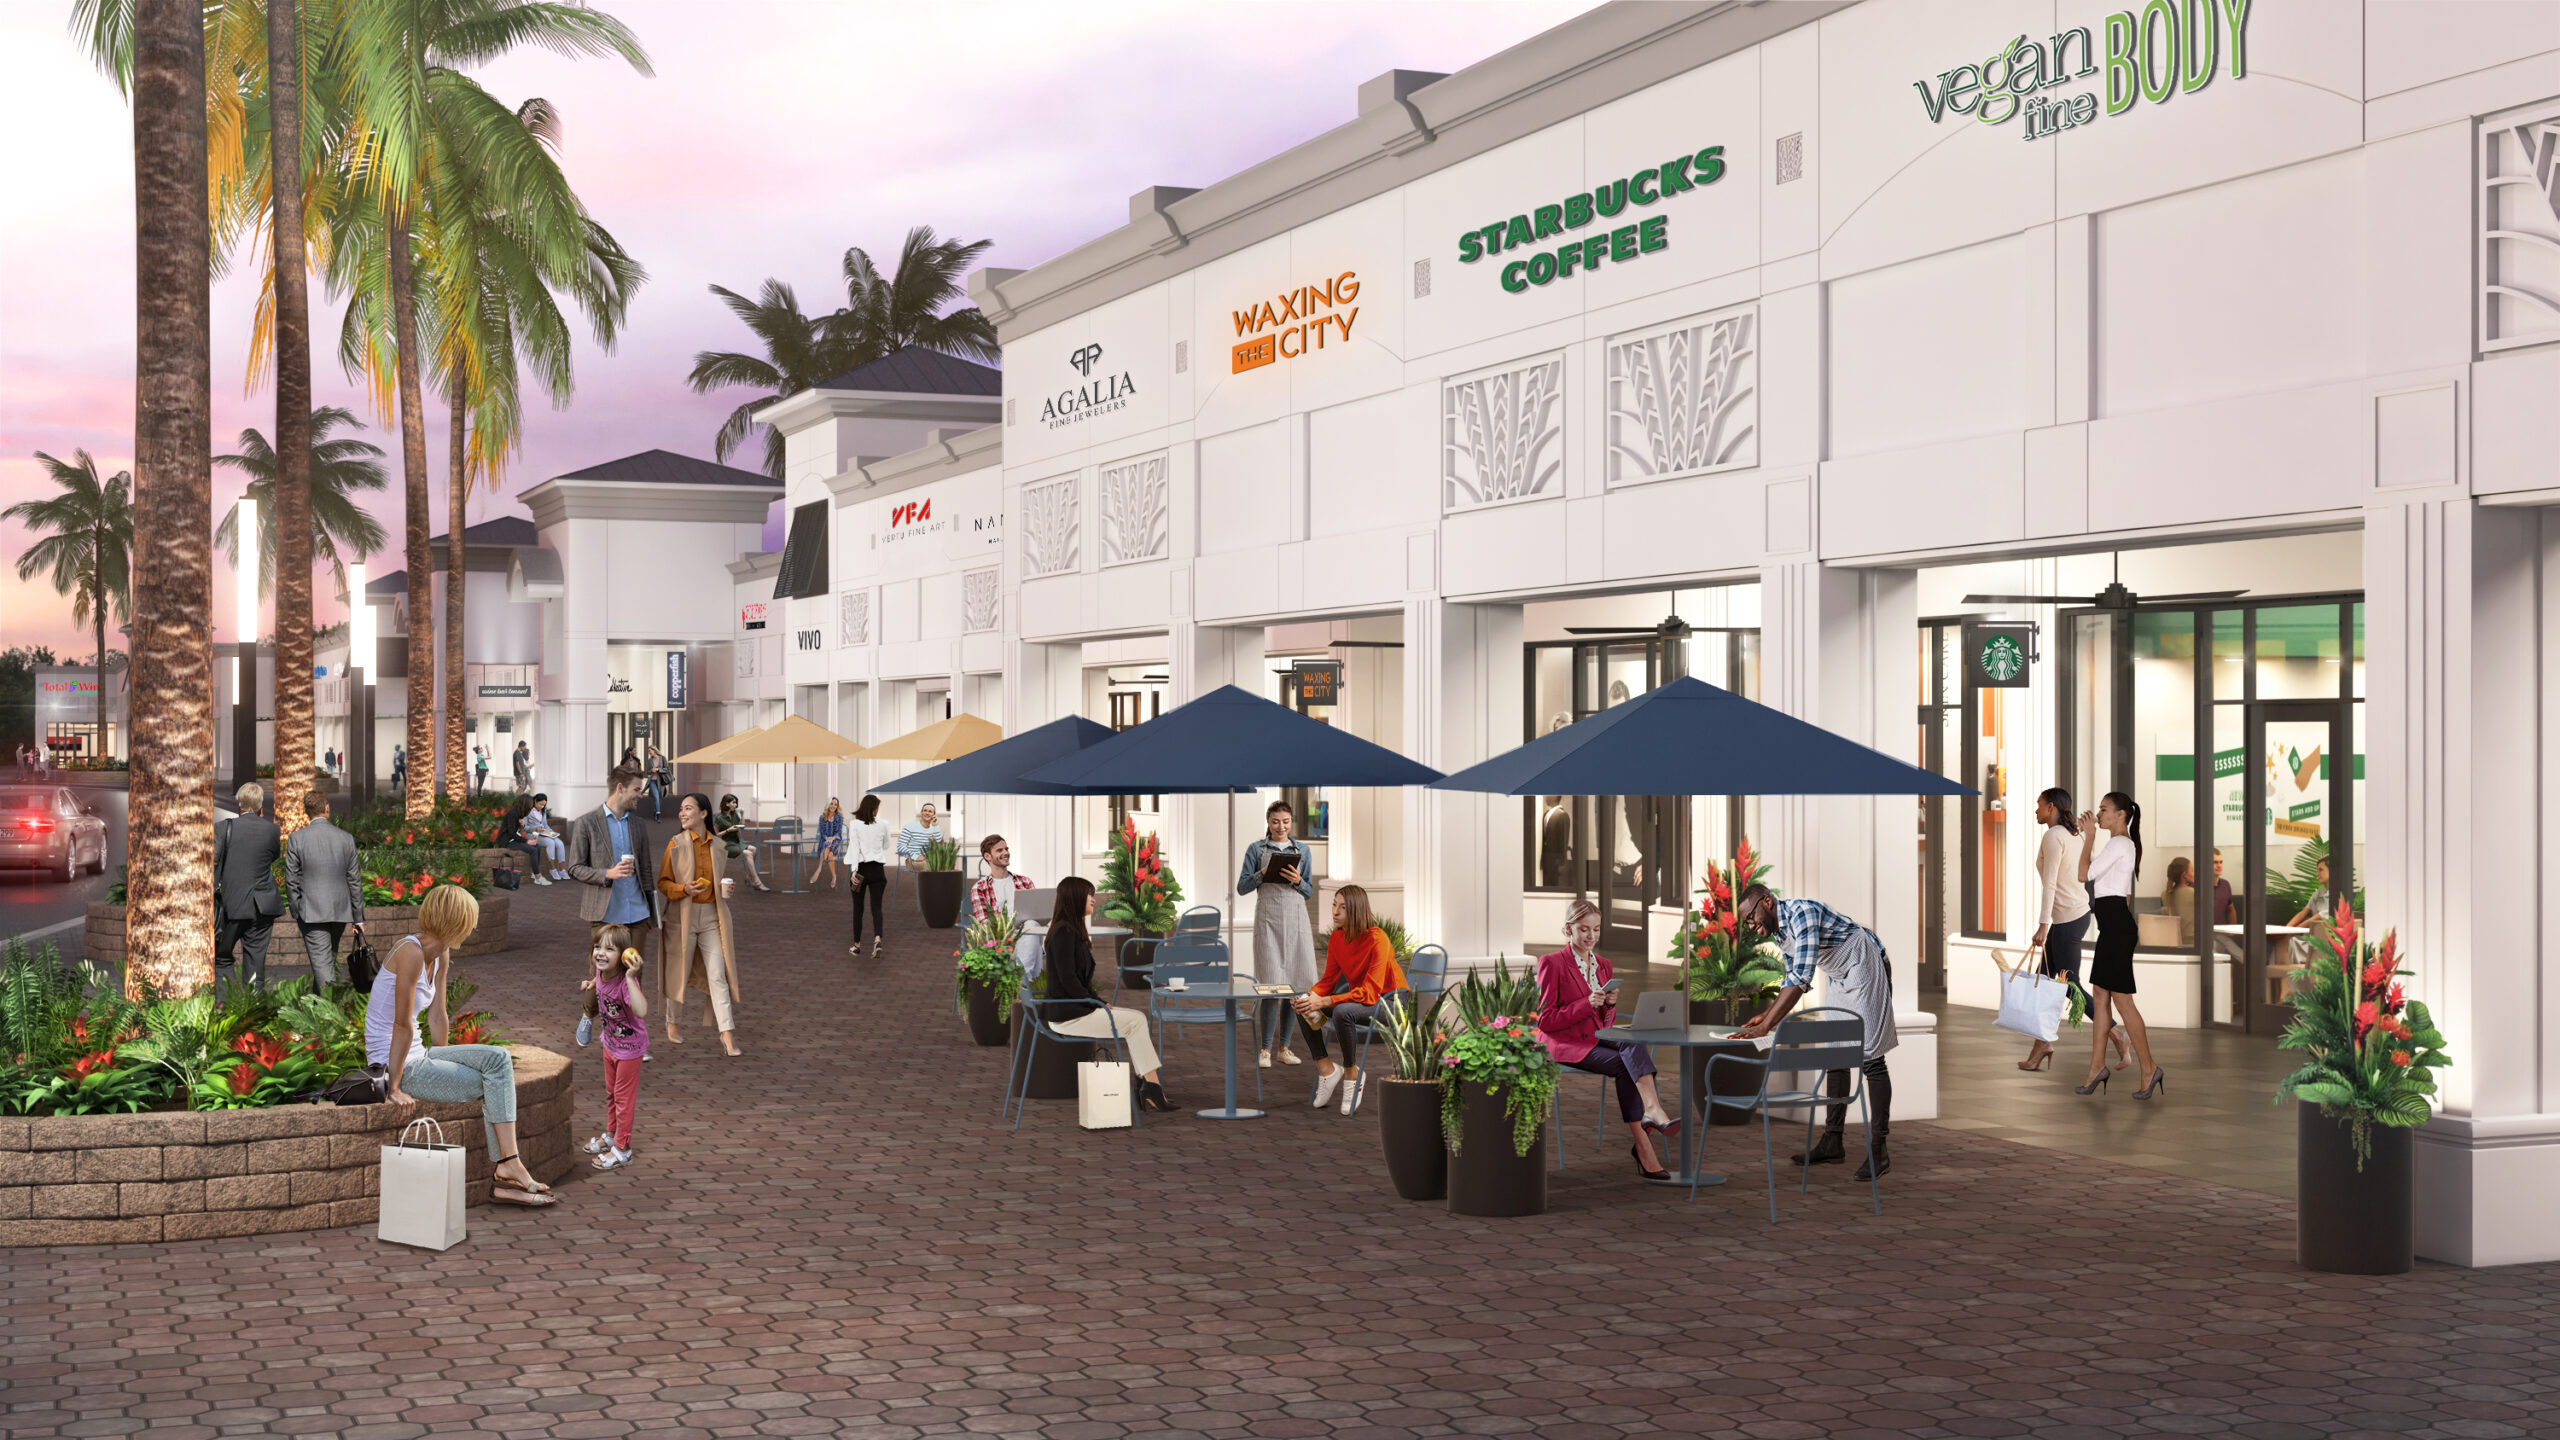 Town Center at Boca Raton completes multimillion-dollar renovation